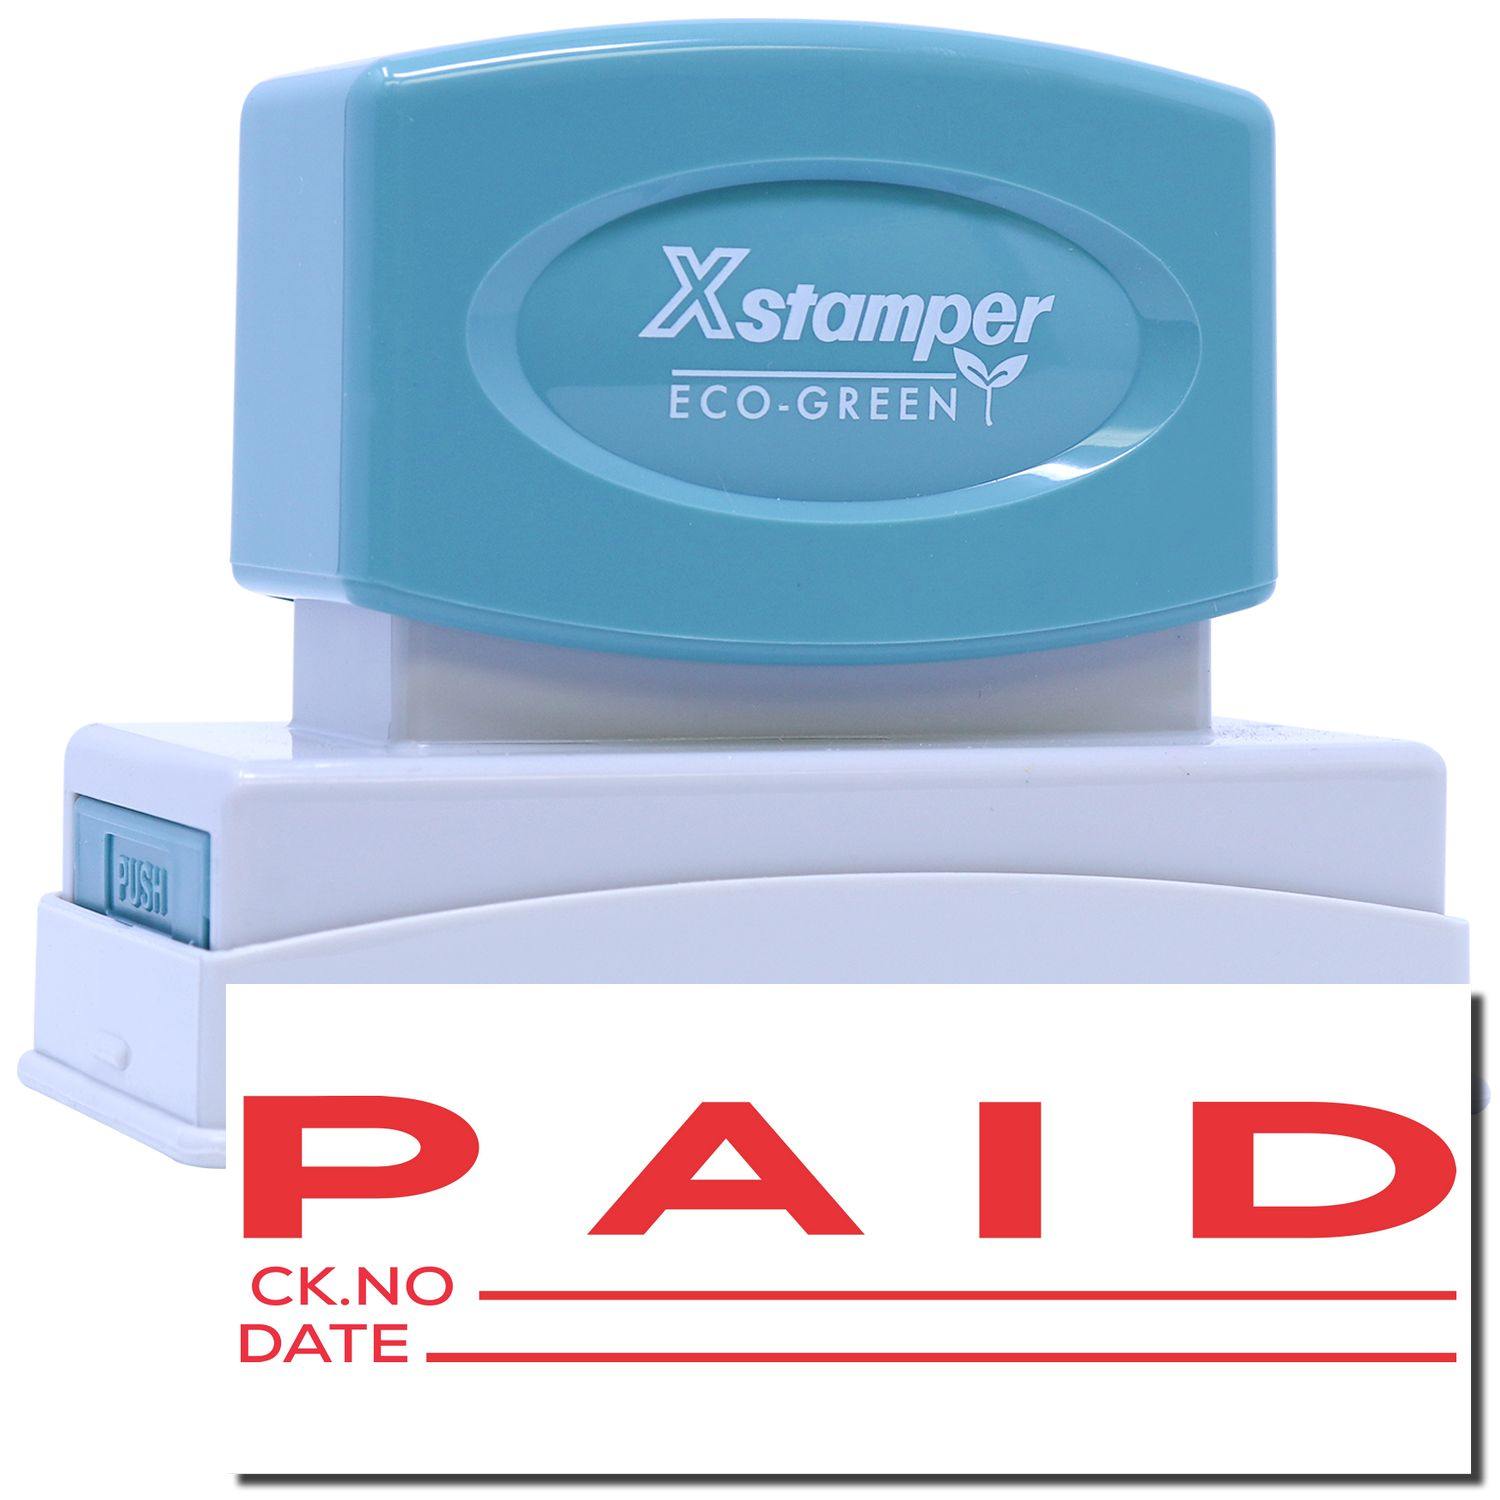 Paid Ck No.-Date Xstamper Stamp Main Image